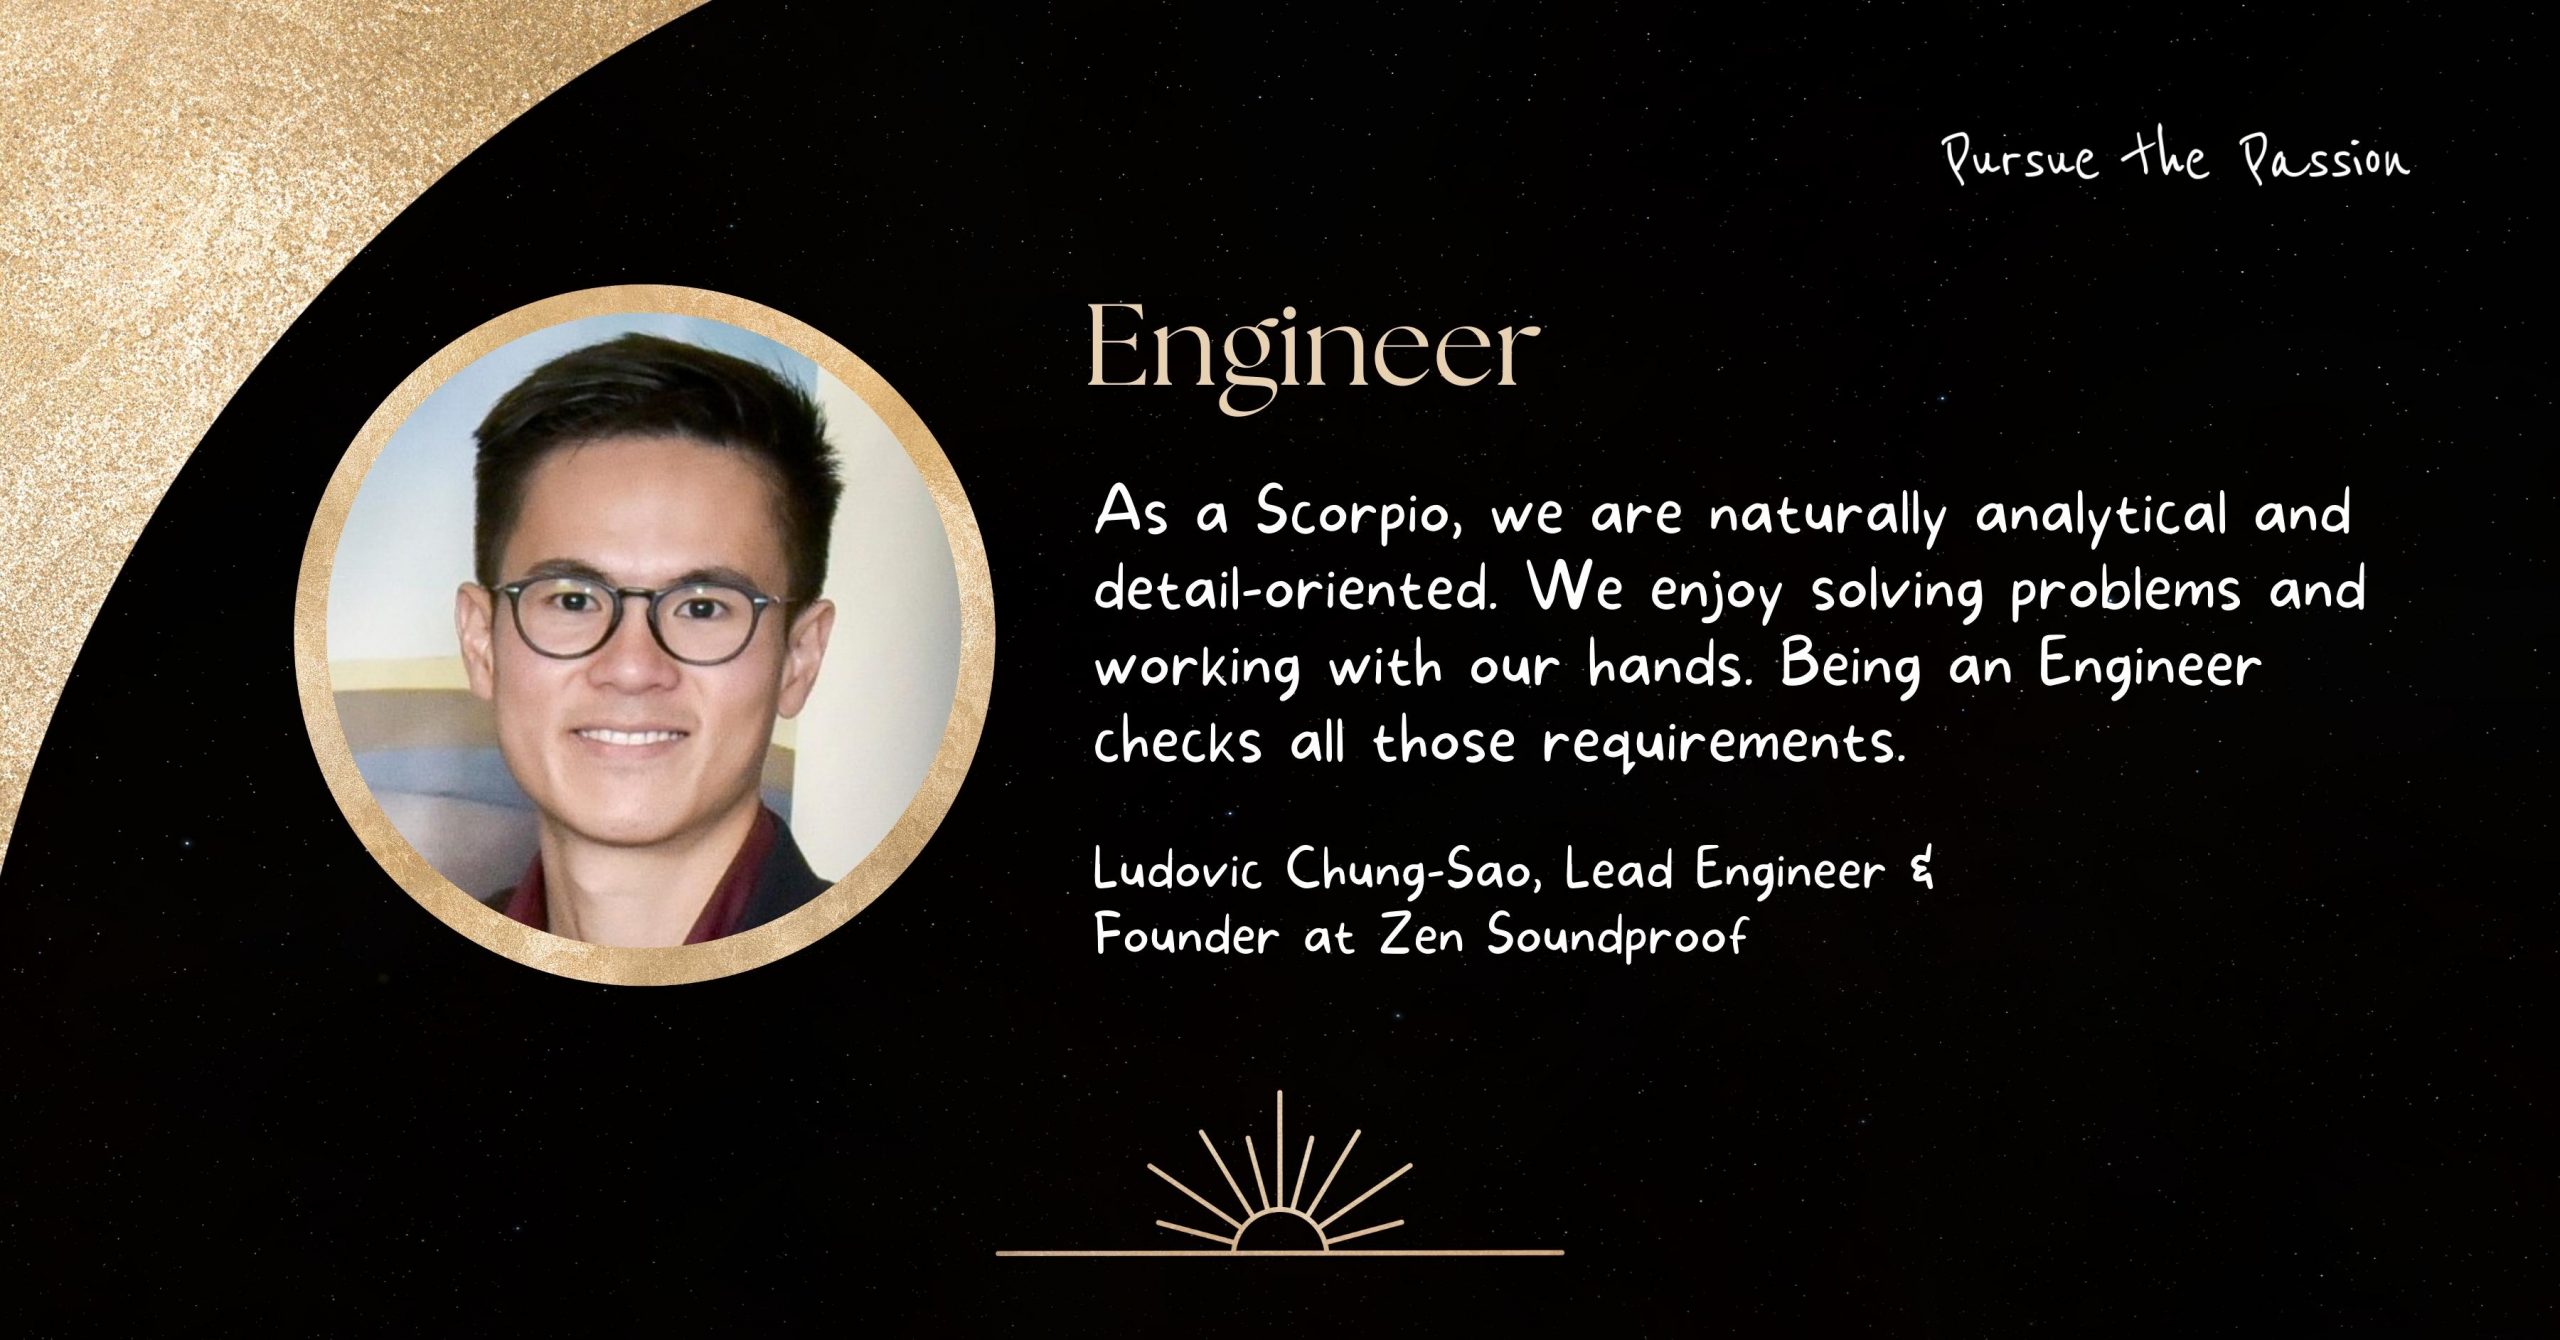 Ludovic Chung-Sao careers for scorpio